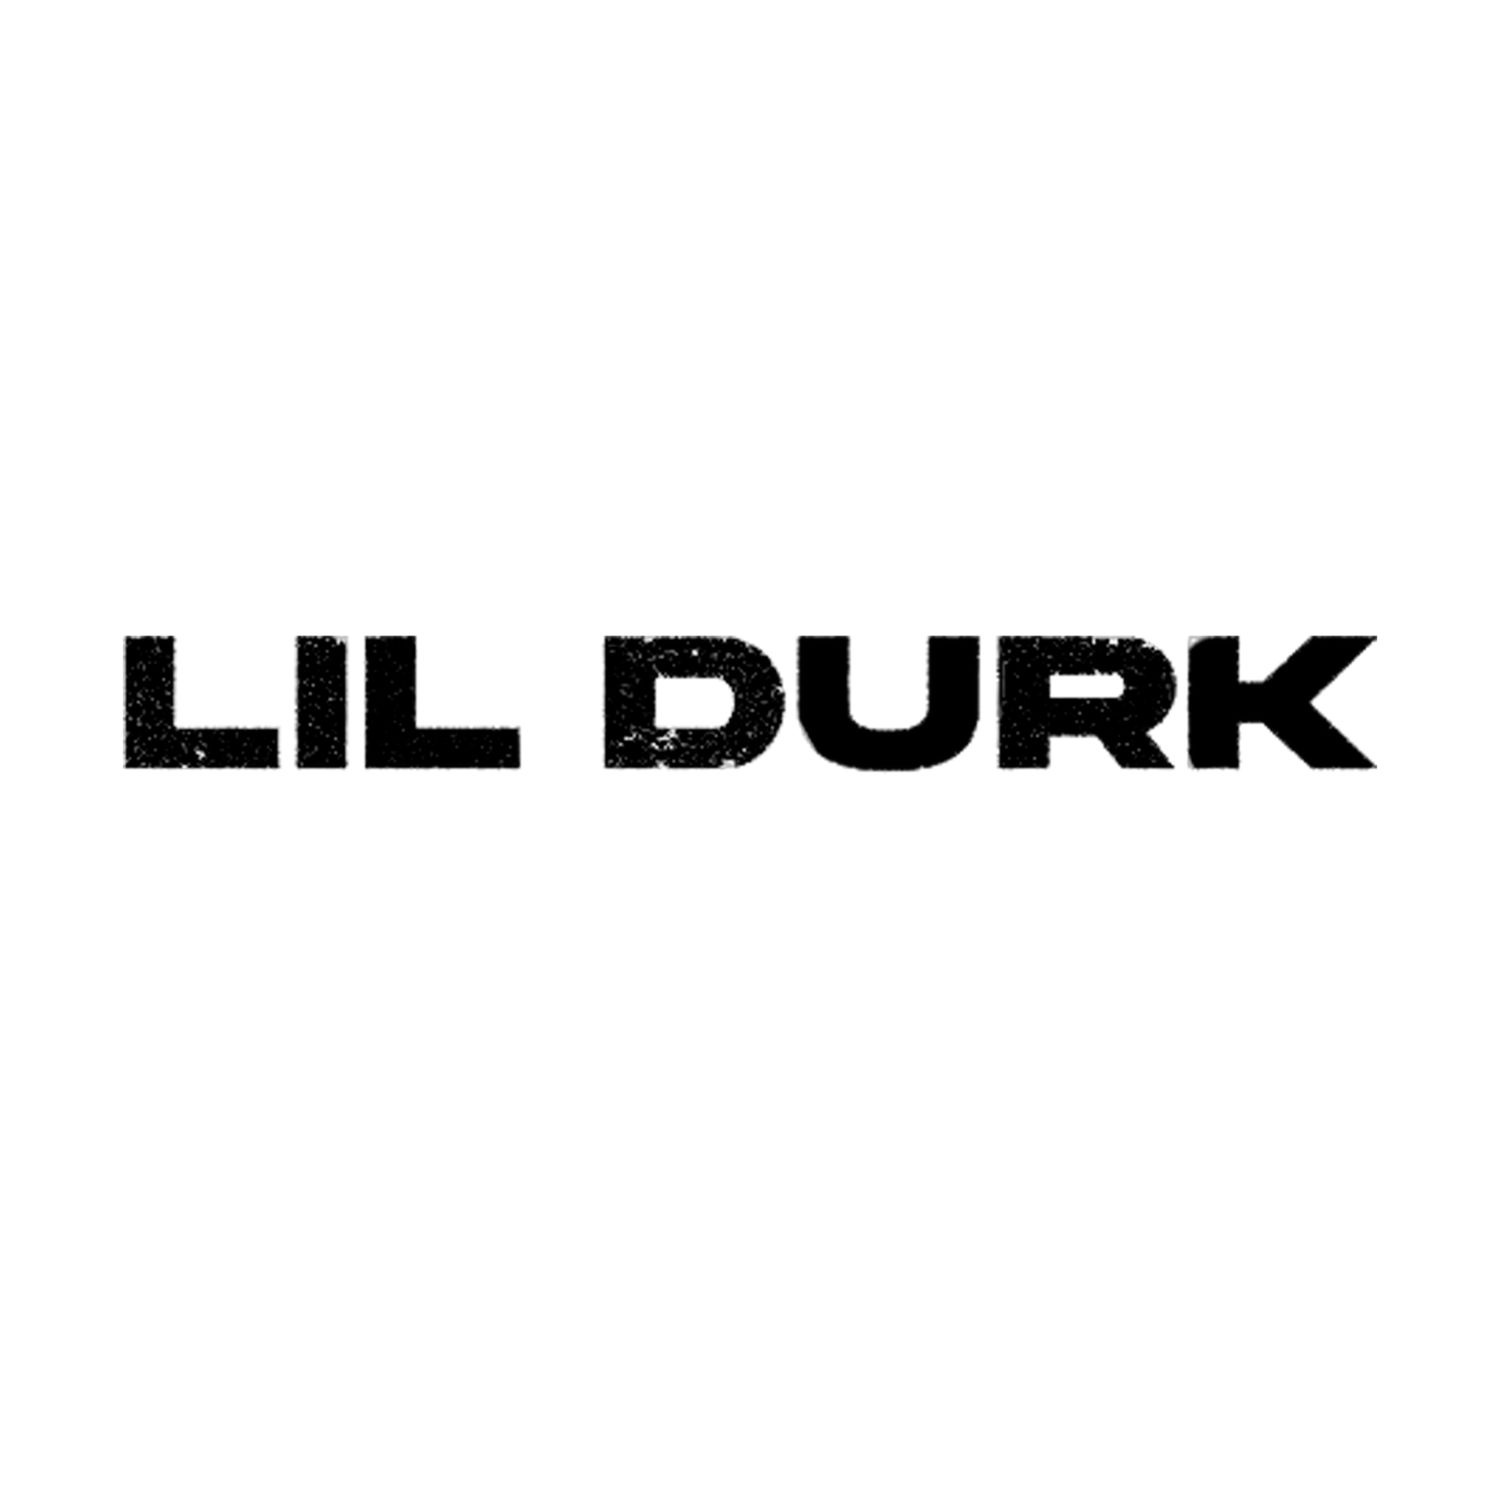 Lil Durk by Lil Durk on Dribbble